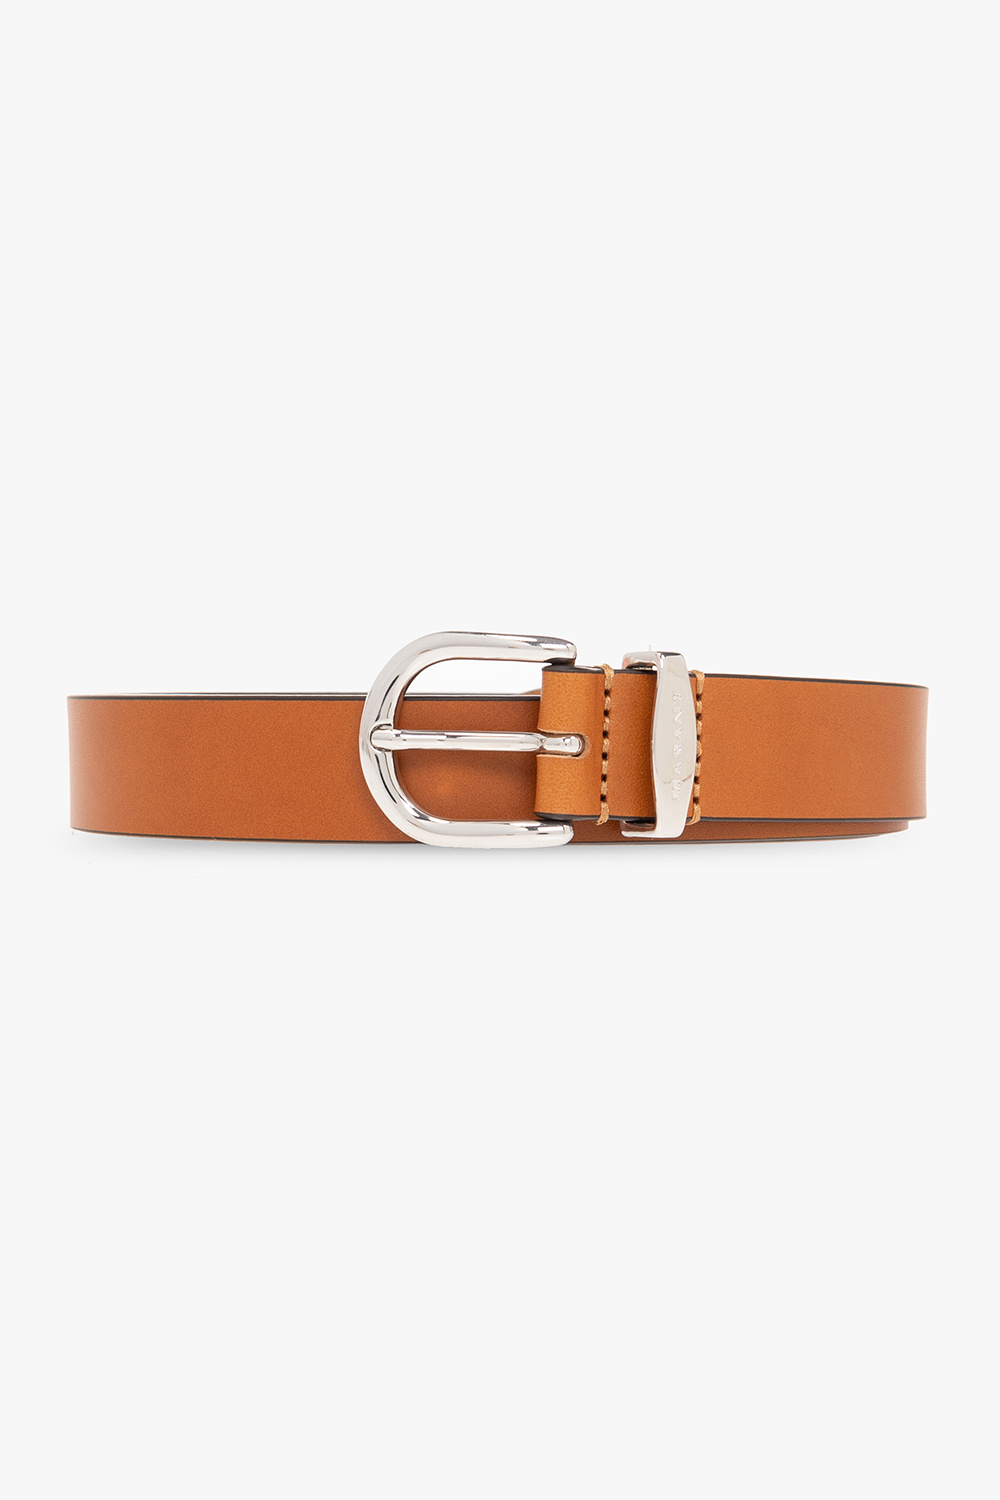 MARANT ‘Zaddh’ leather belt